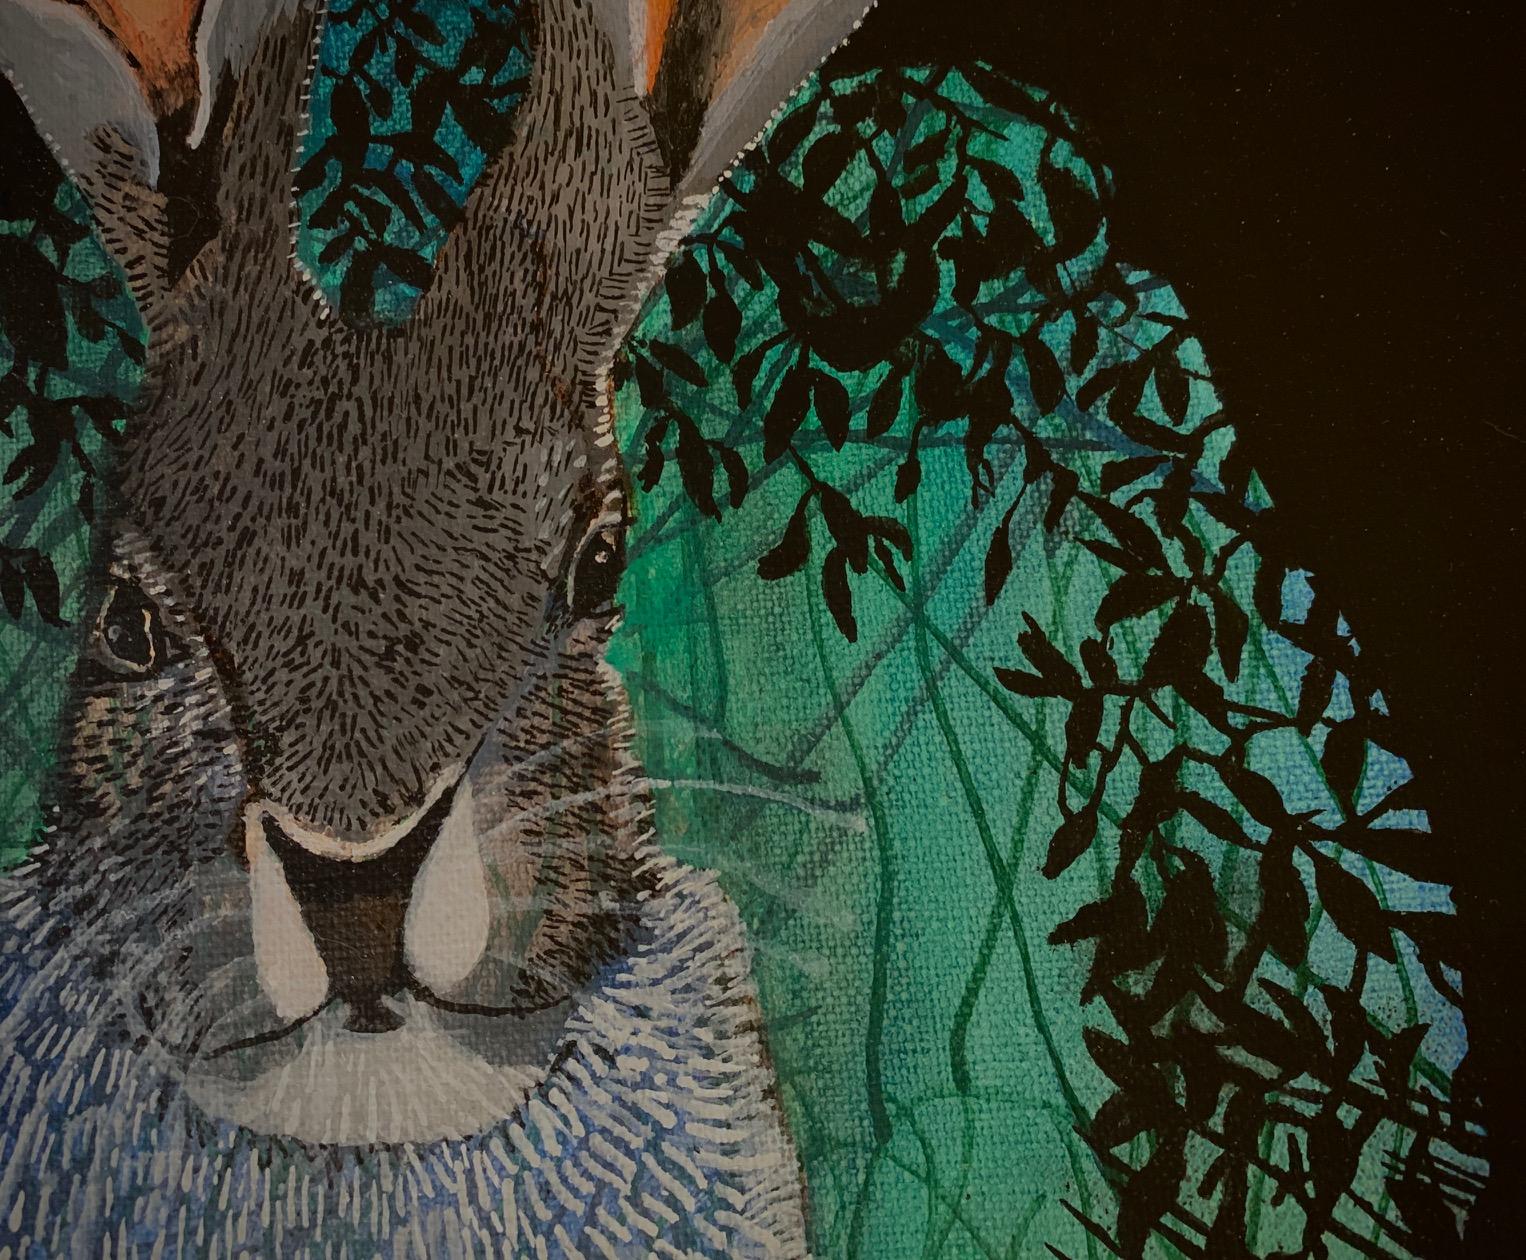 Rabbit 2 - Contemporary Figurative Animals Oil Painting, Magical Realism, Nature - Black Animal Painting by Aleksandra Bujnowska